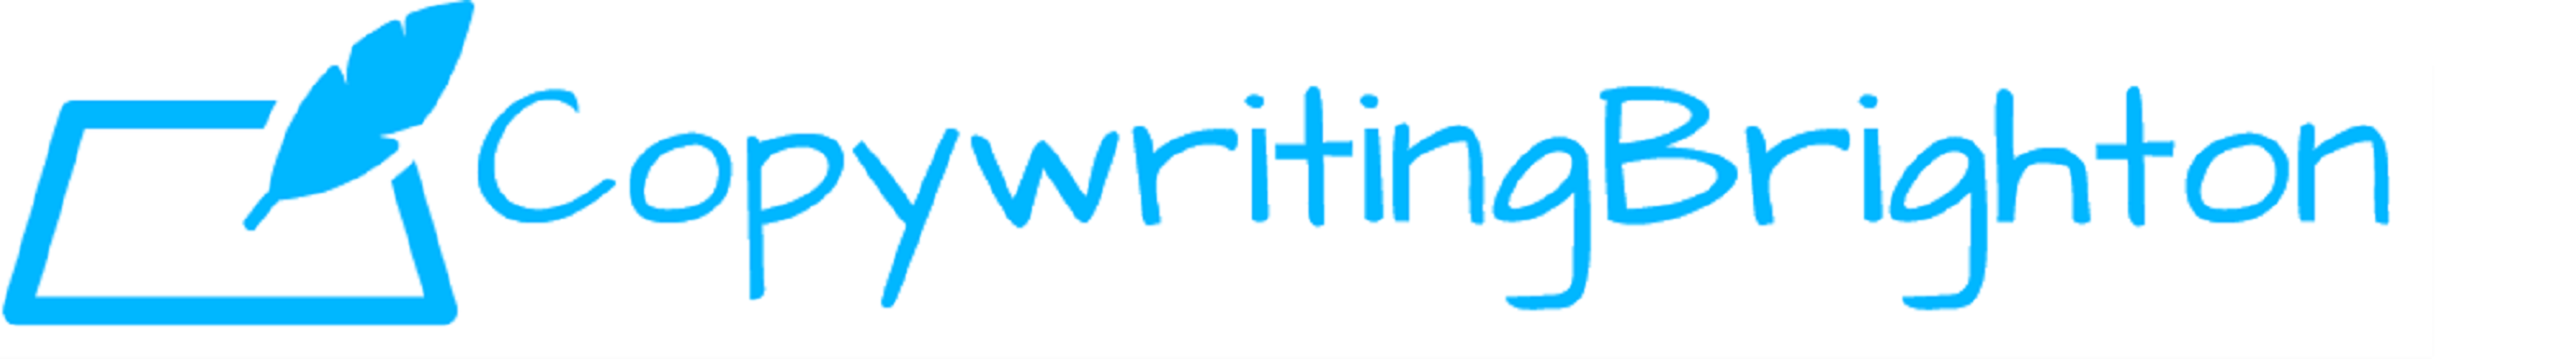 © Copy Writing Brighton logo